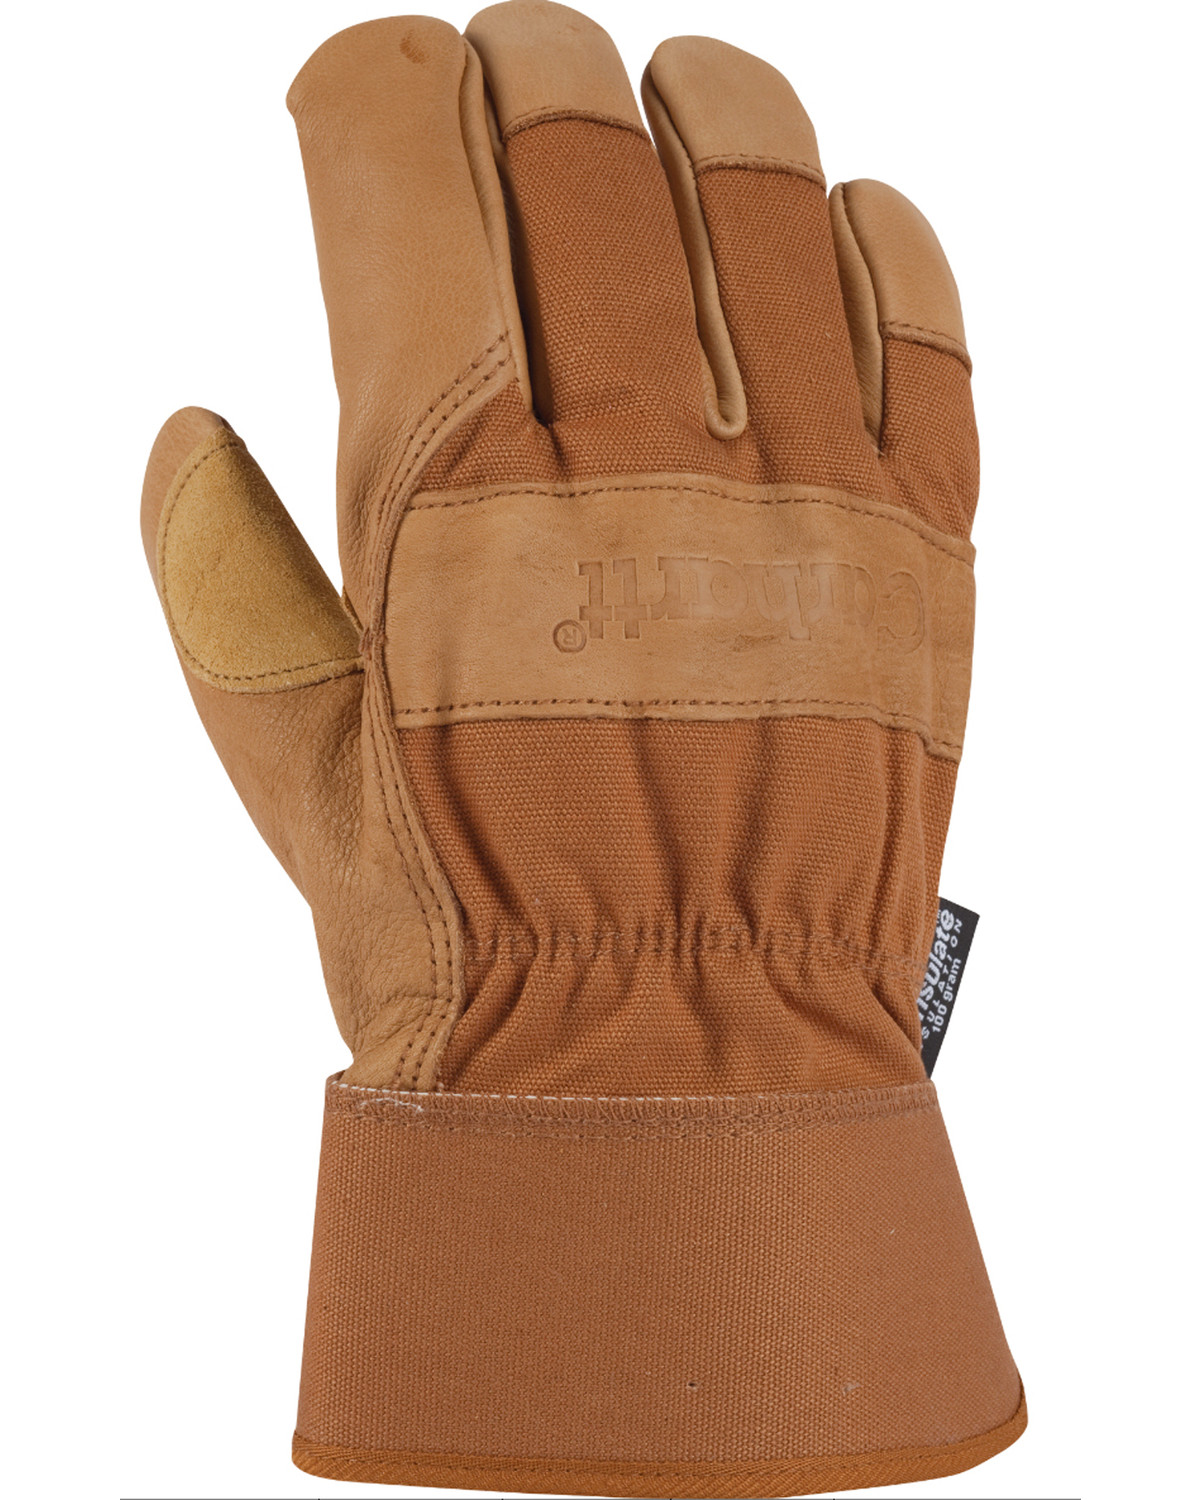 Carhartt Men's Insulated Grain Leather Work Gloves